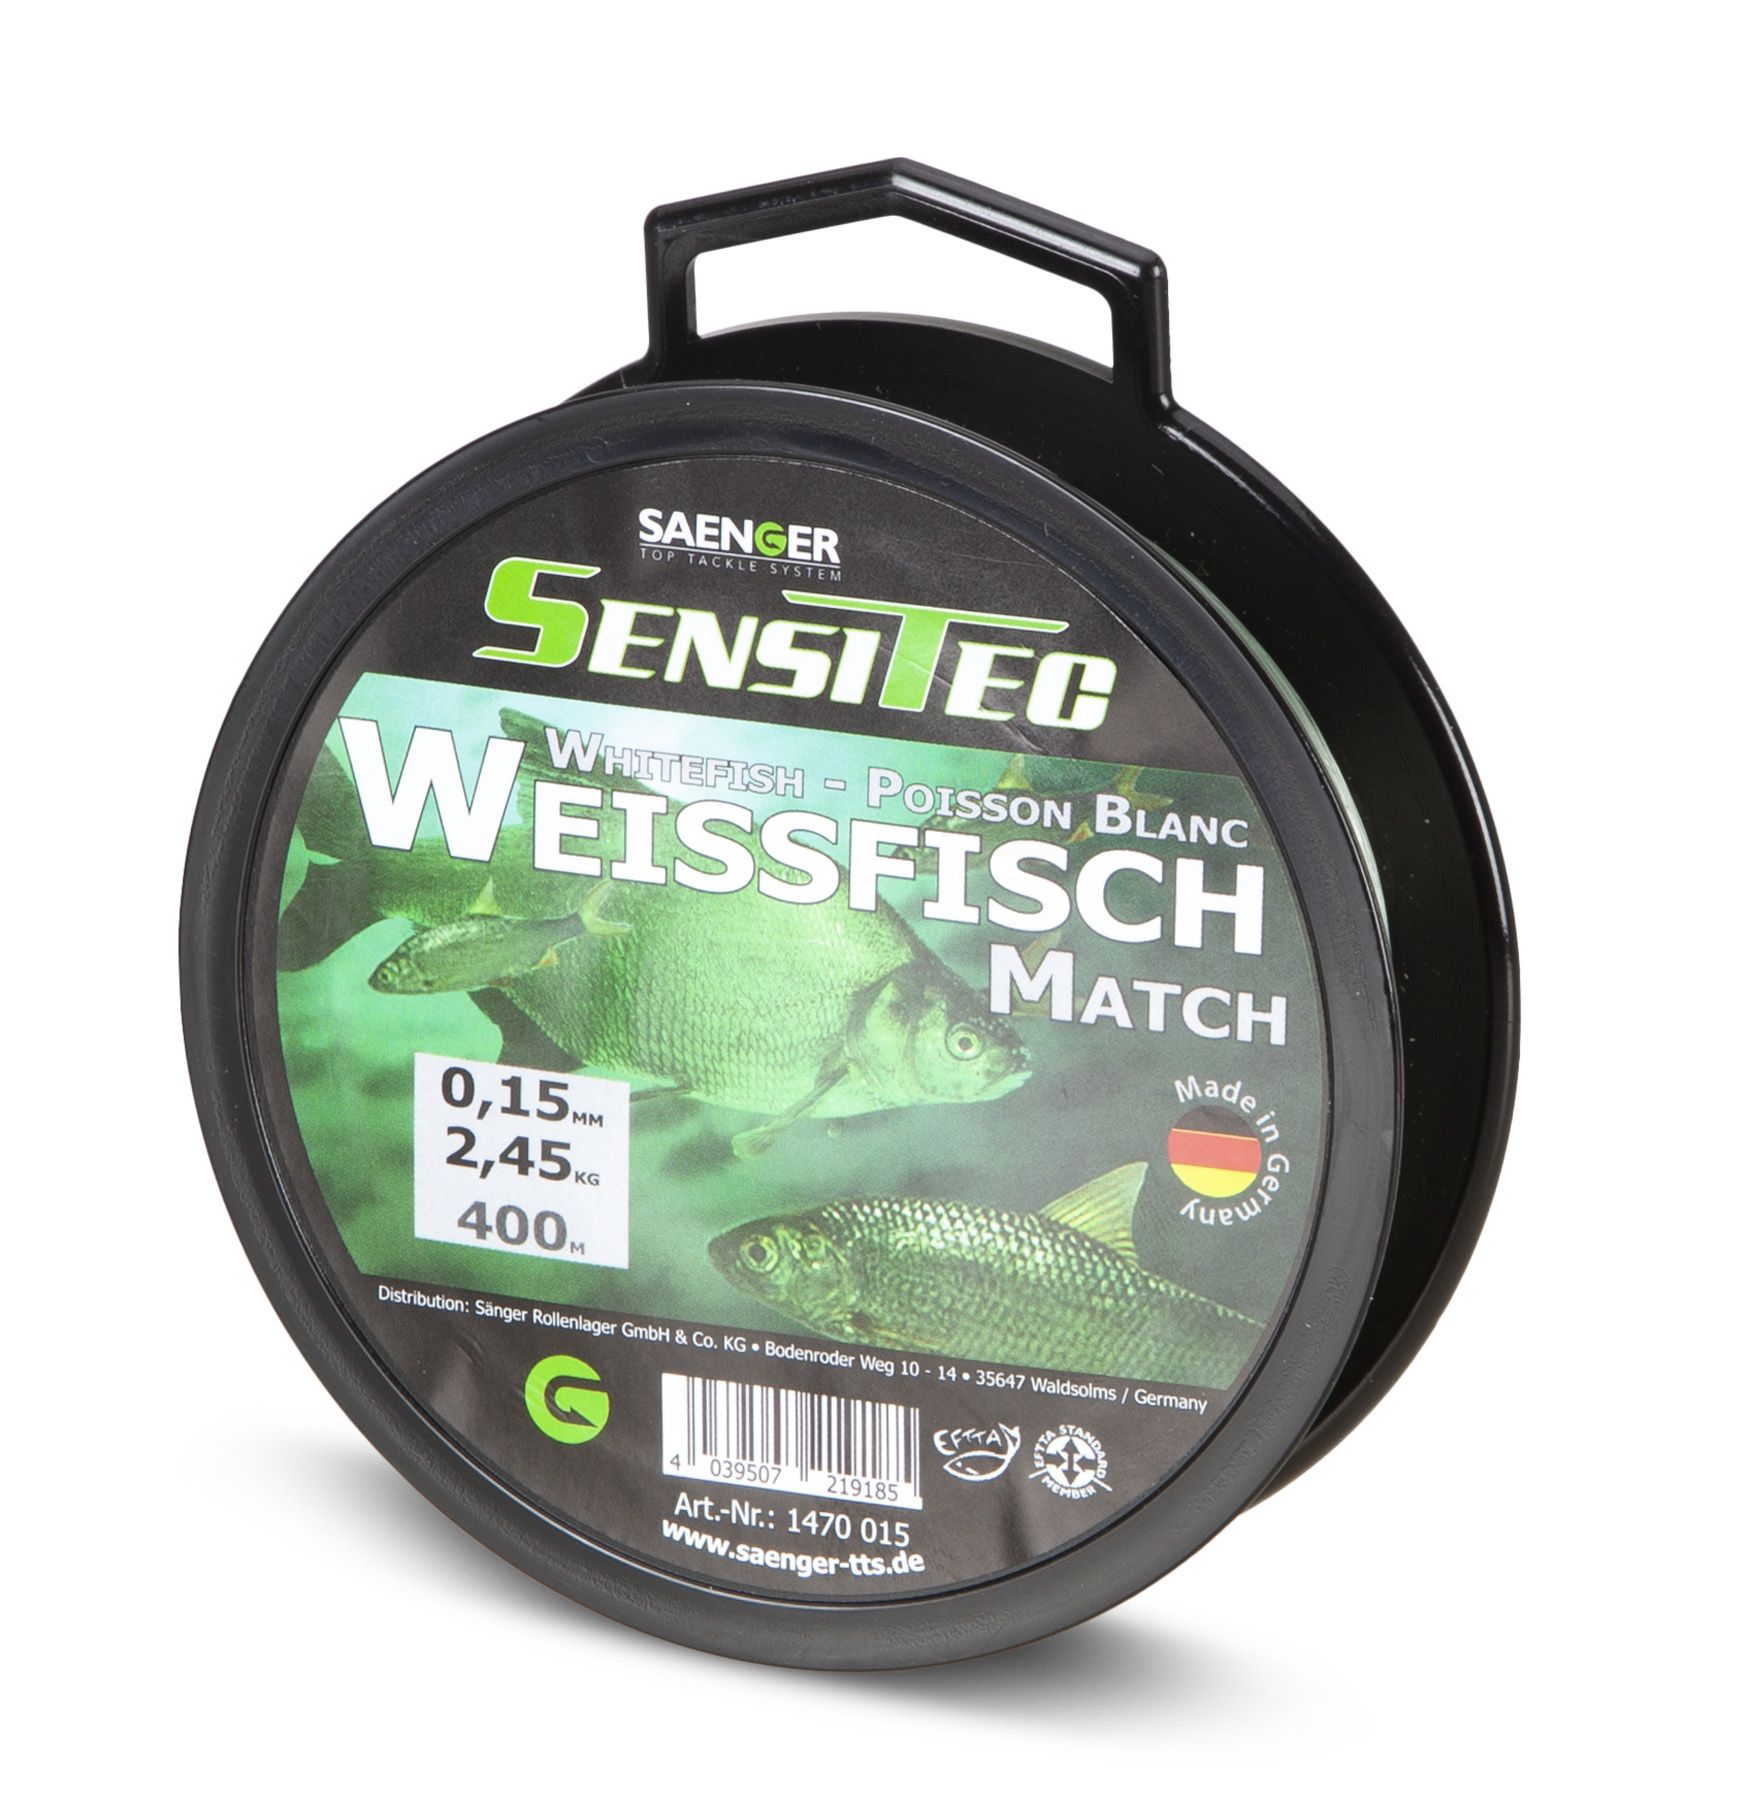 Sensitec Match Weißf. limpid green 400m 0,18mm